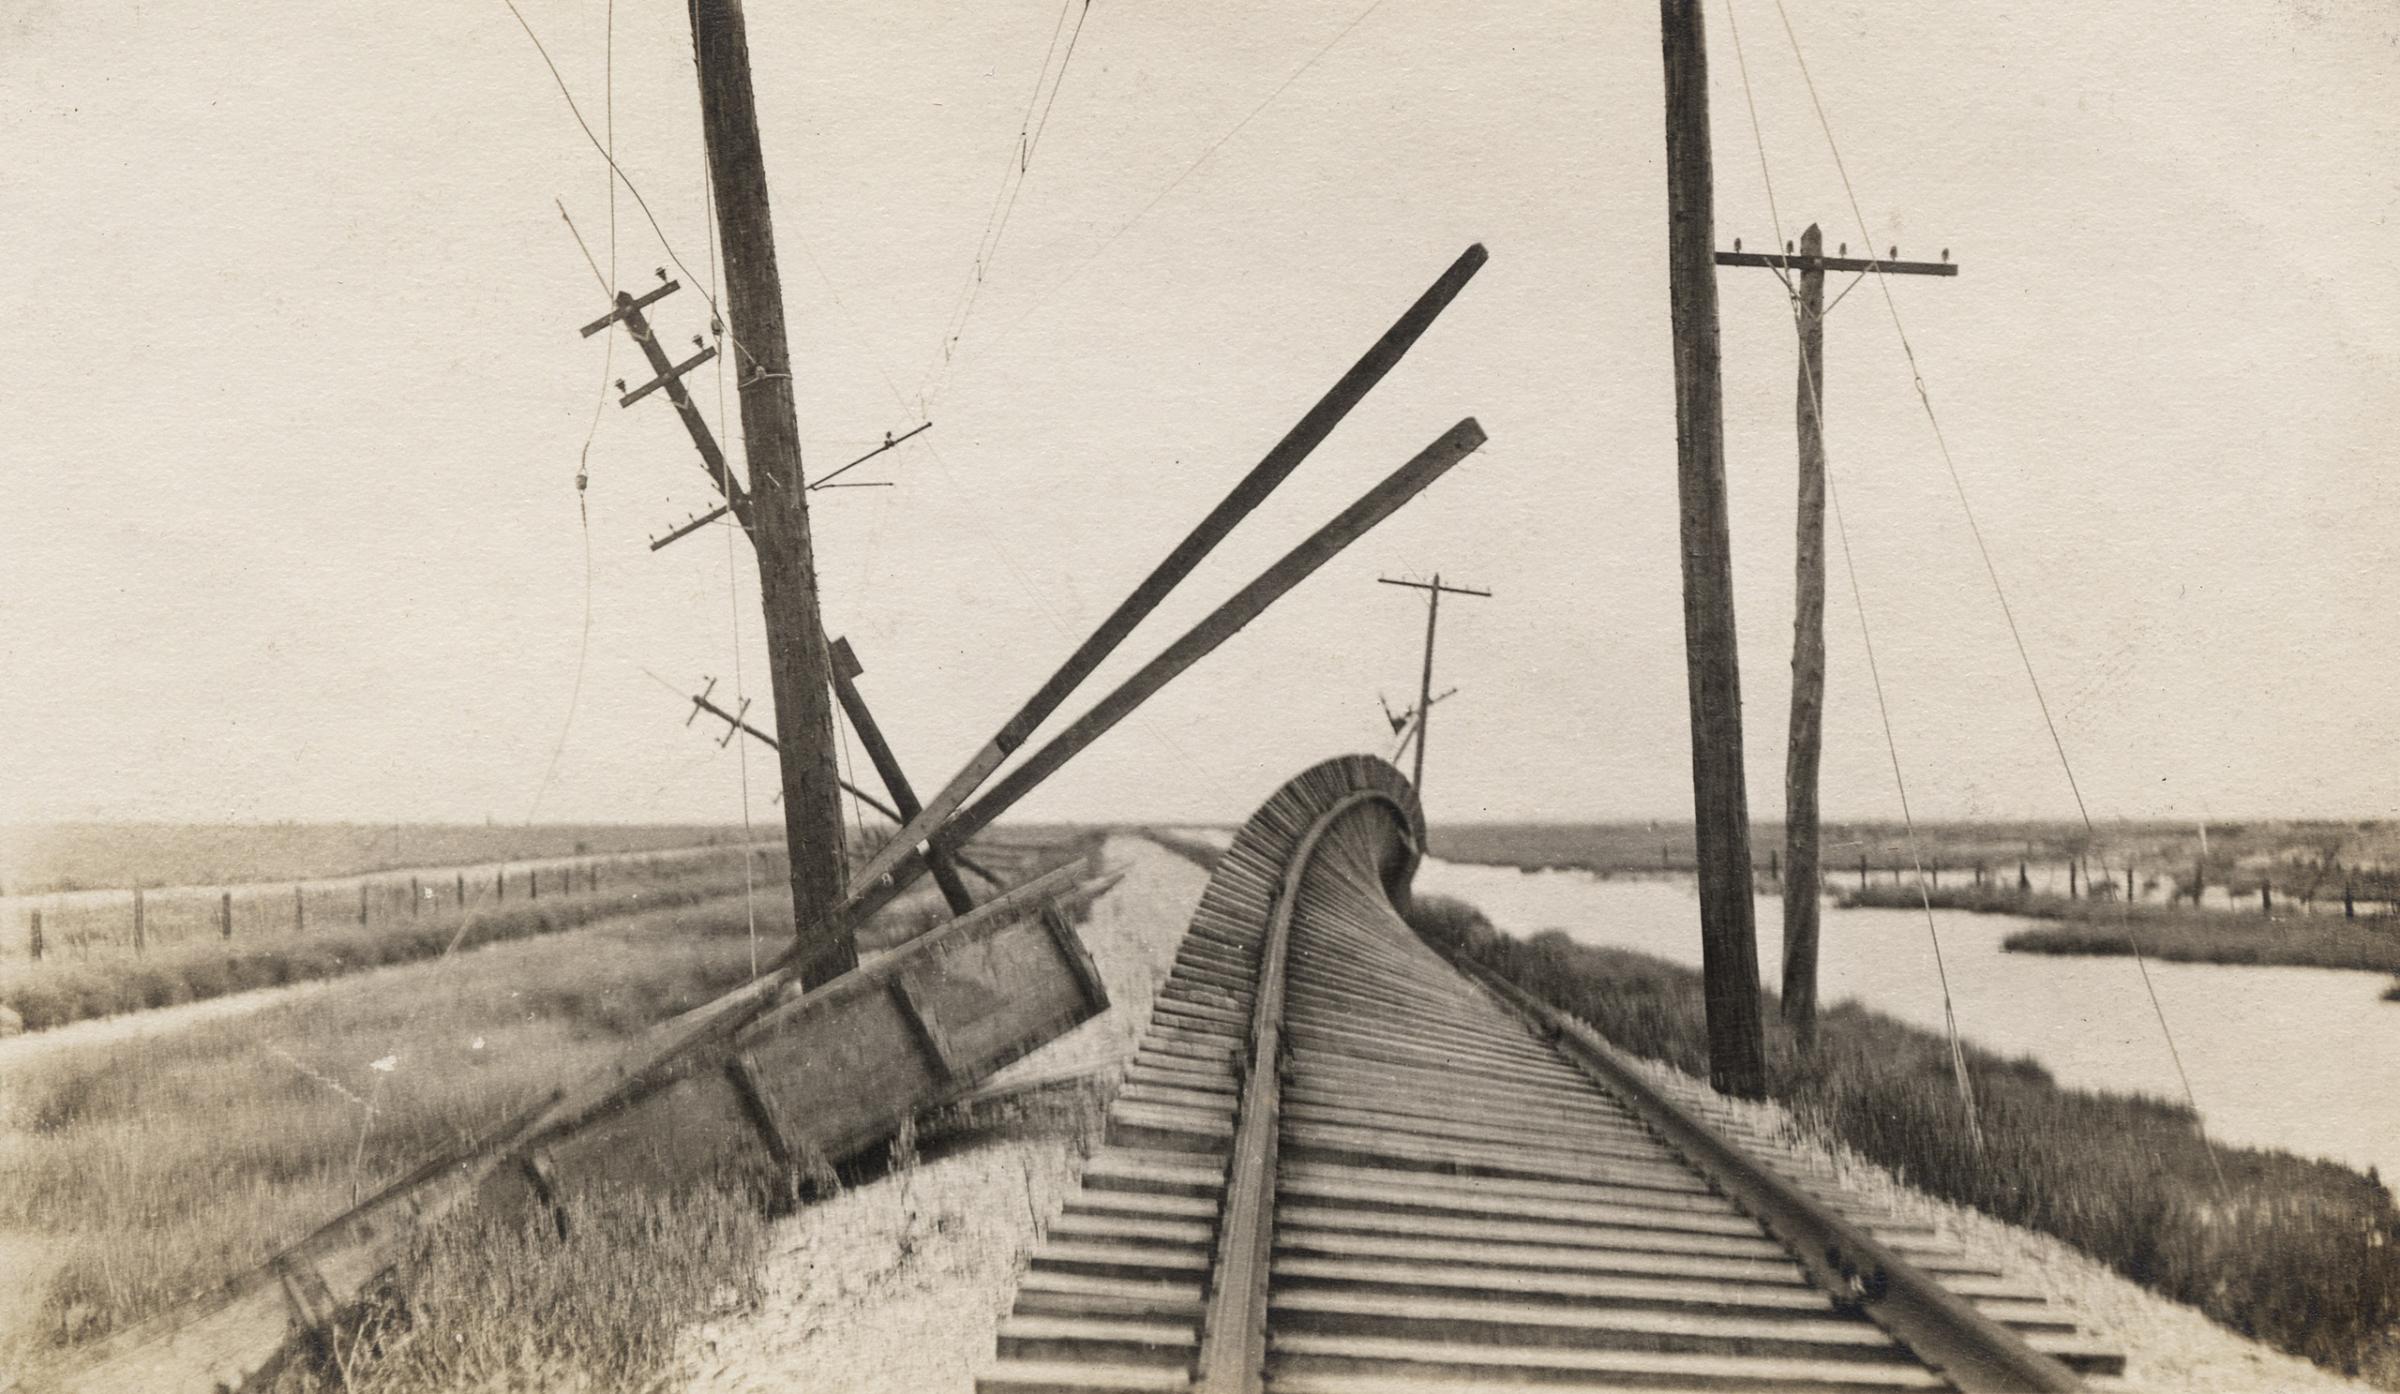 Scenes from the 1915 Galveston Texax Hurricane